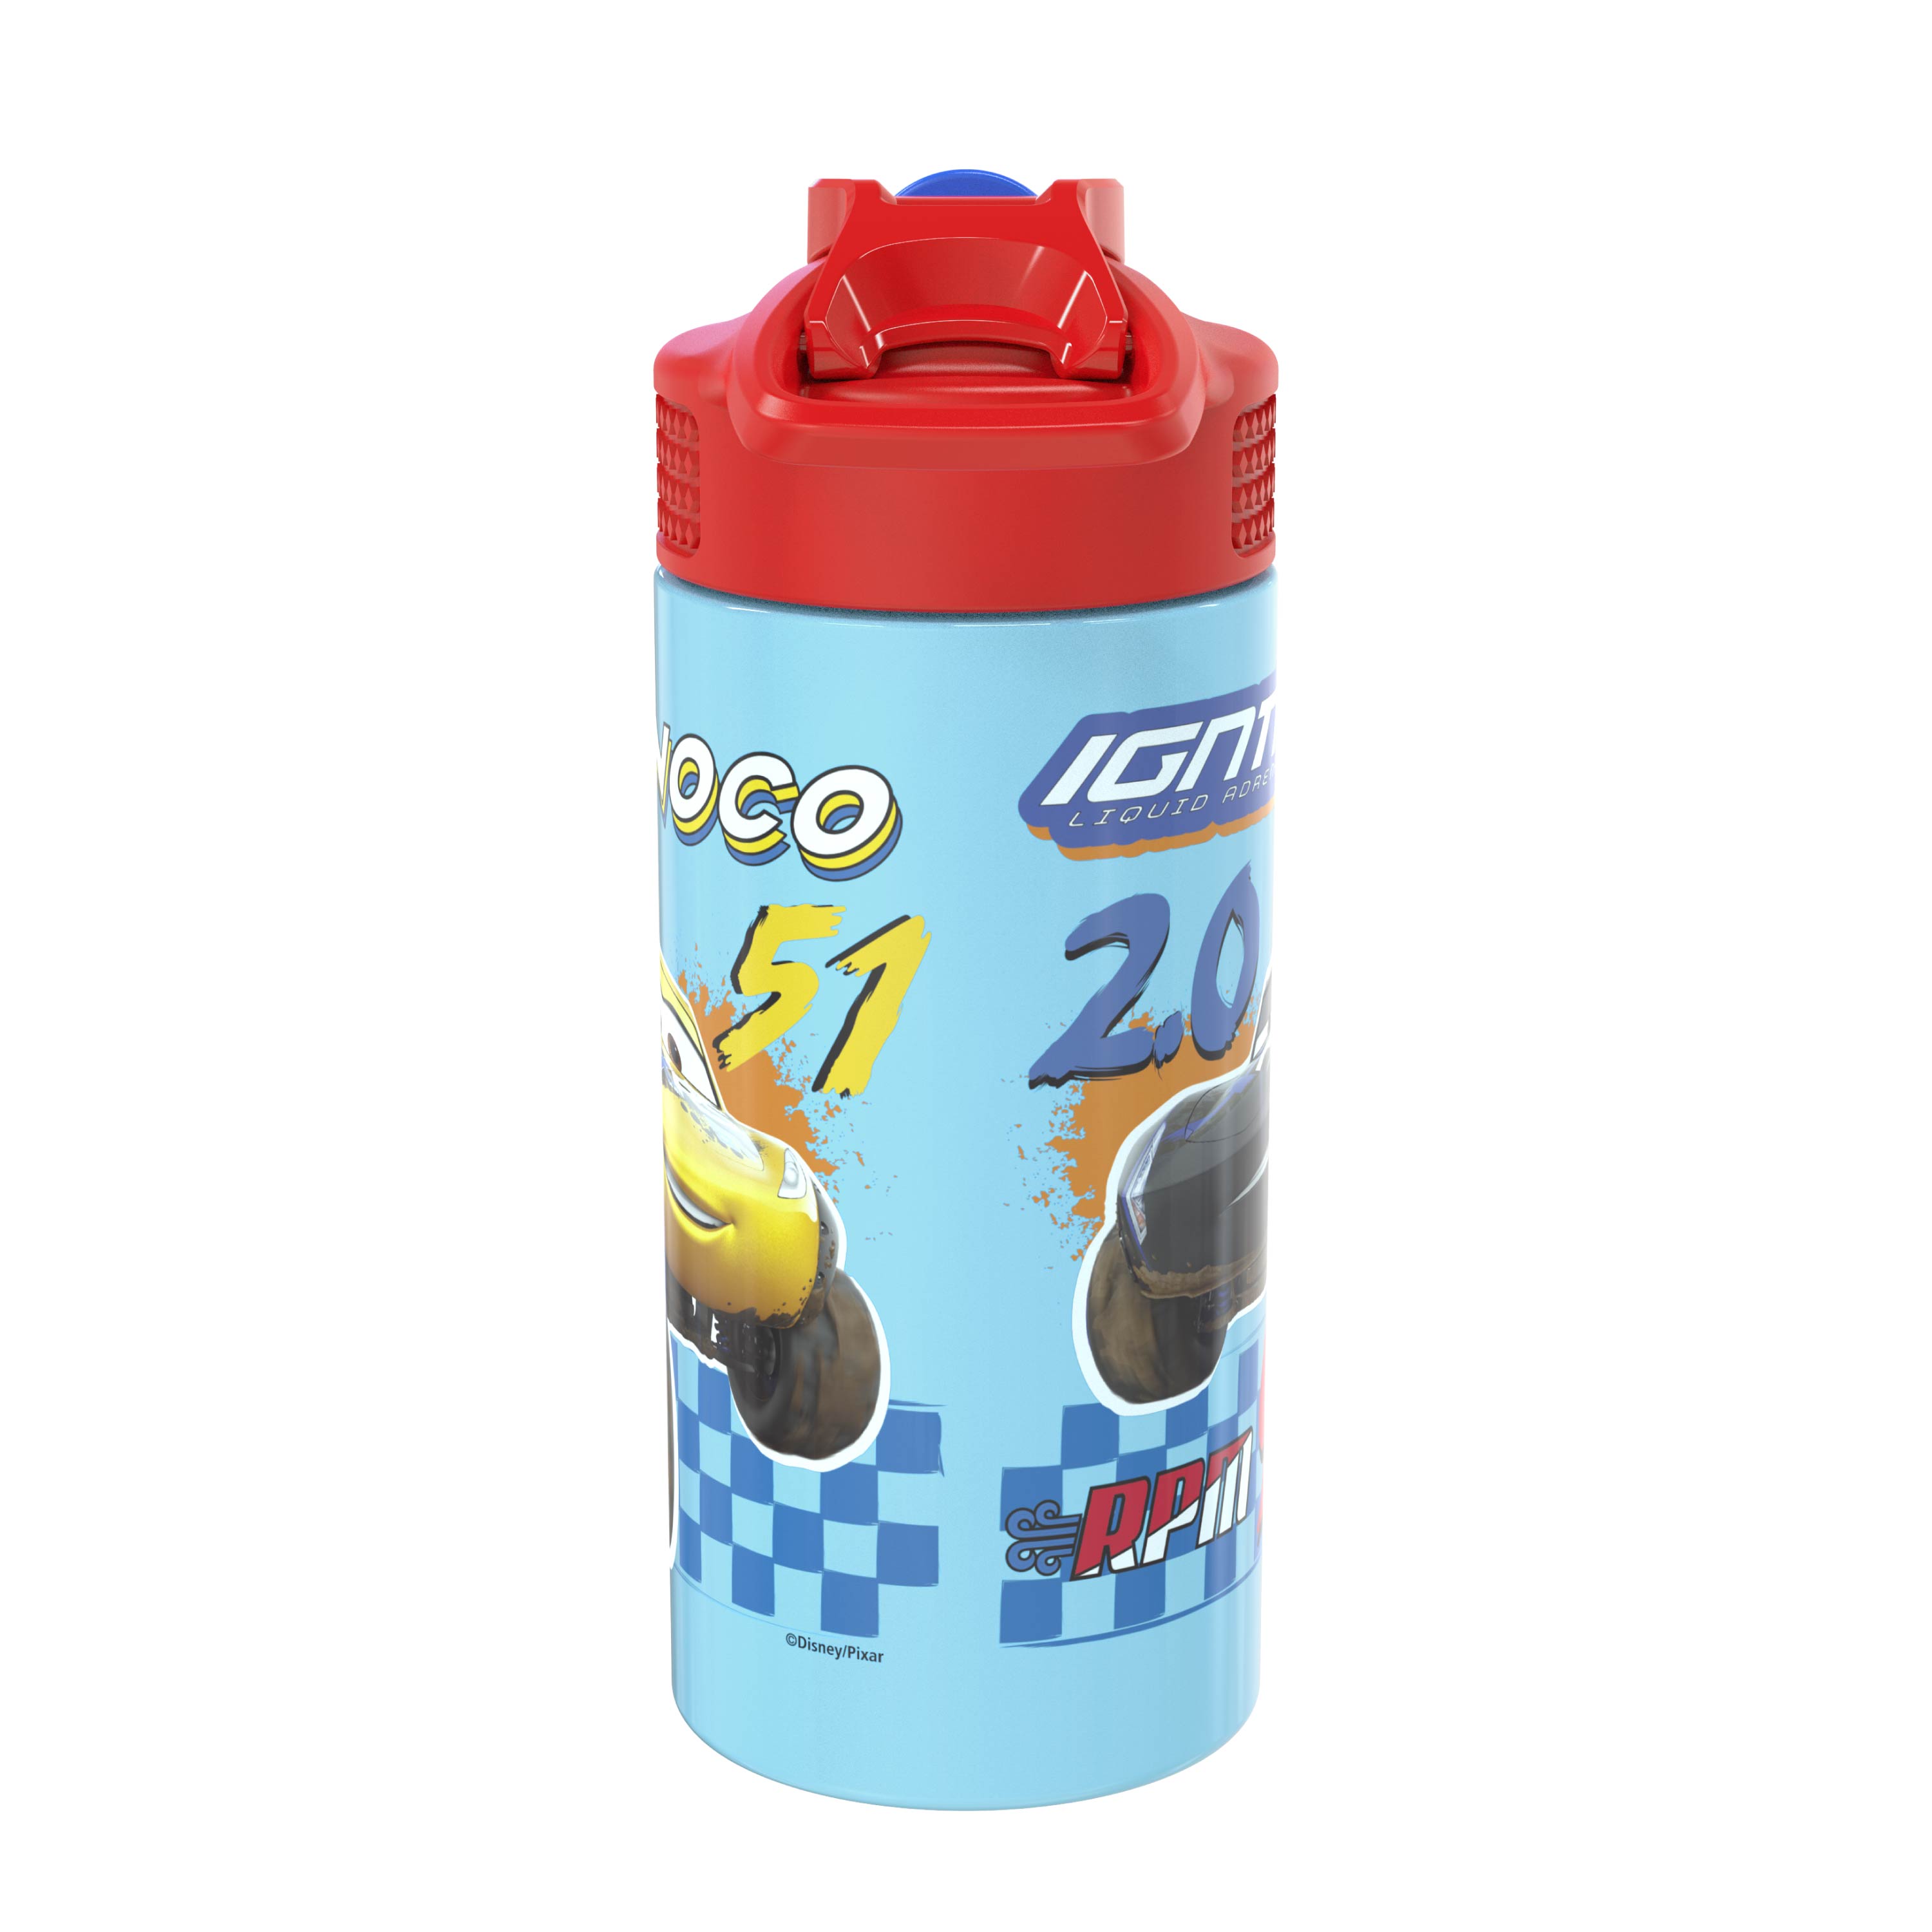 Disney Store Disney Pixar Cars On The Road Water Bottle